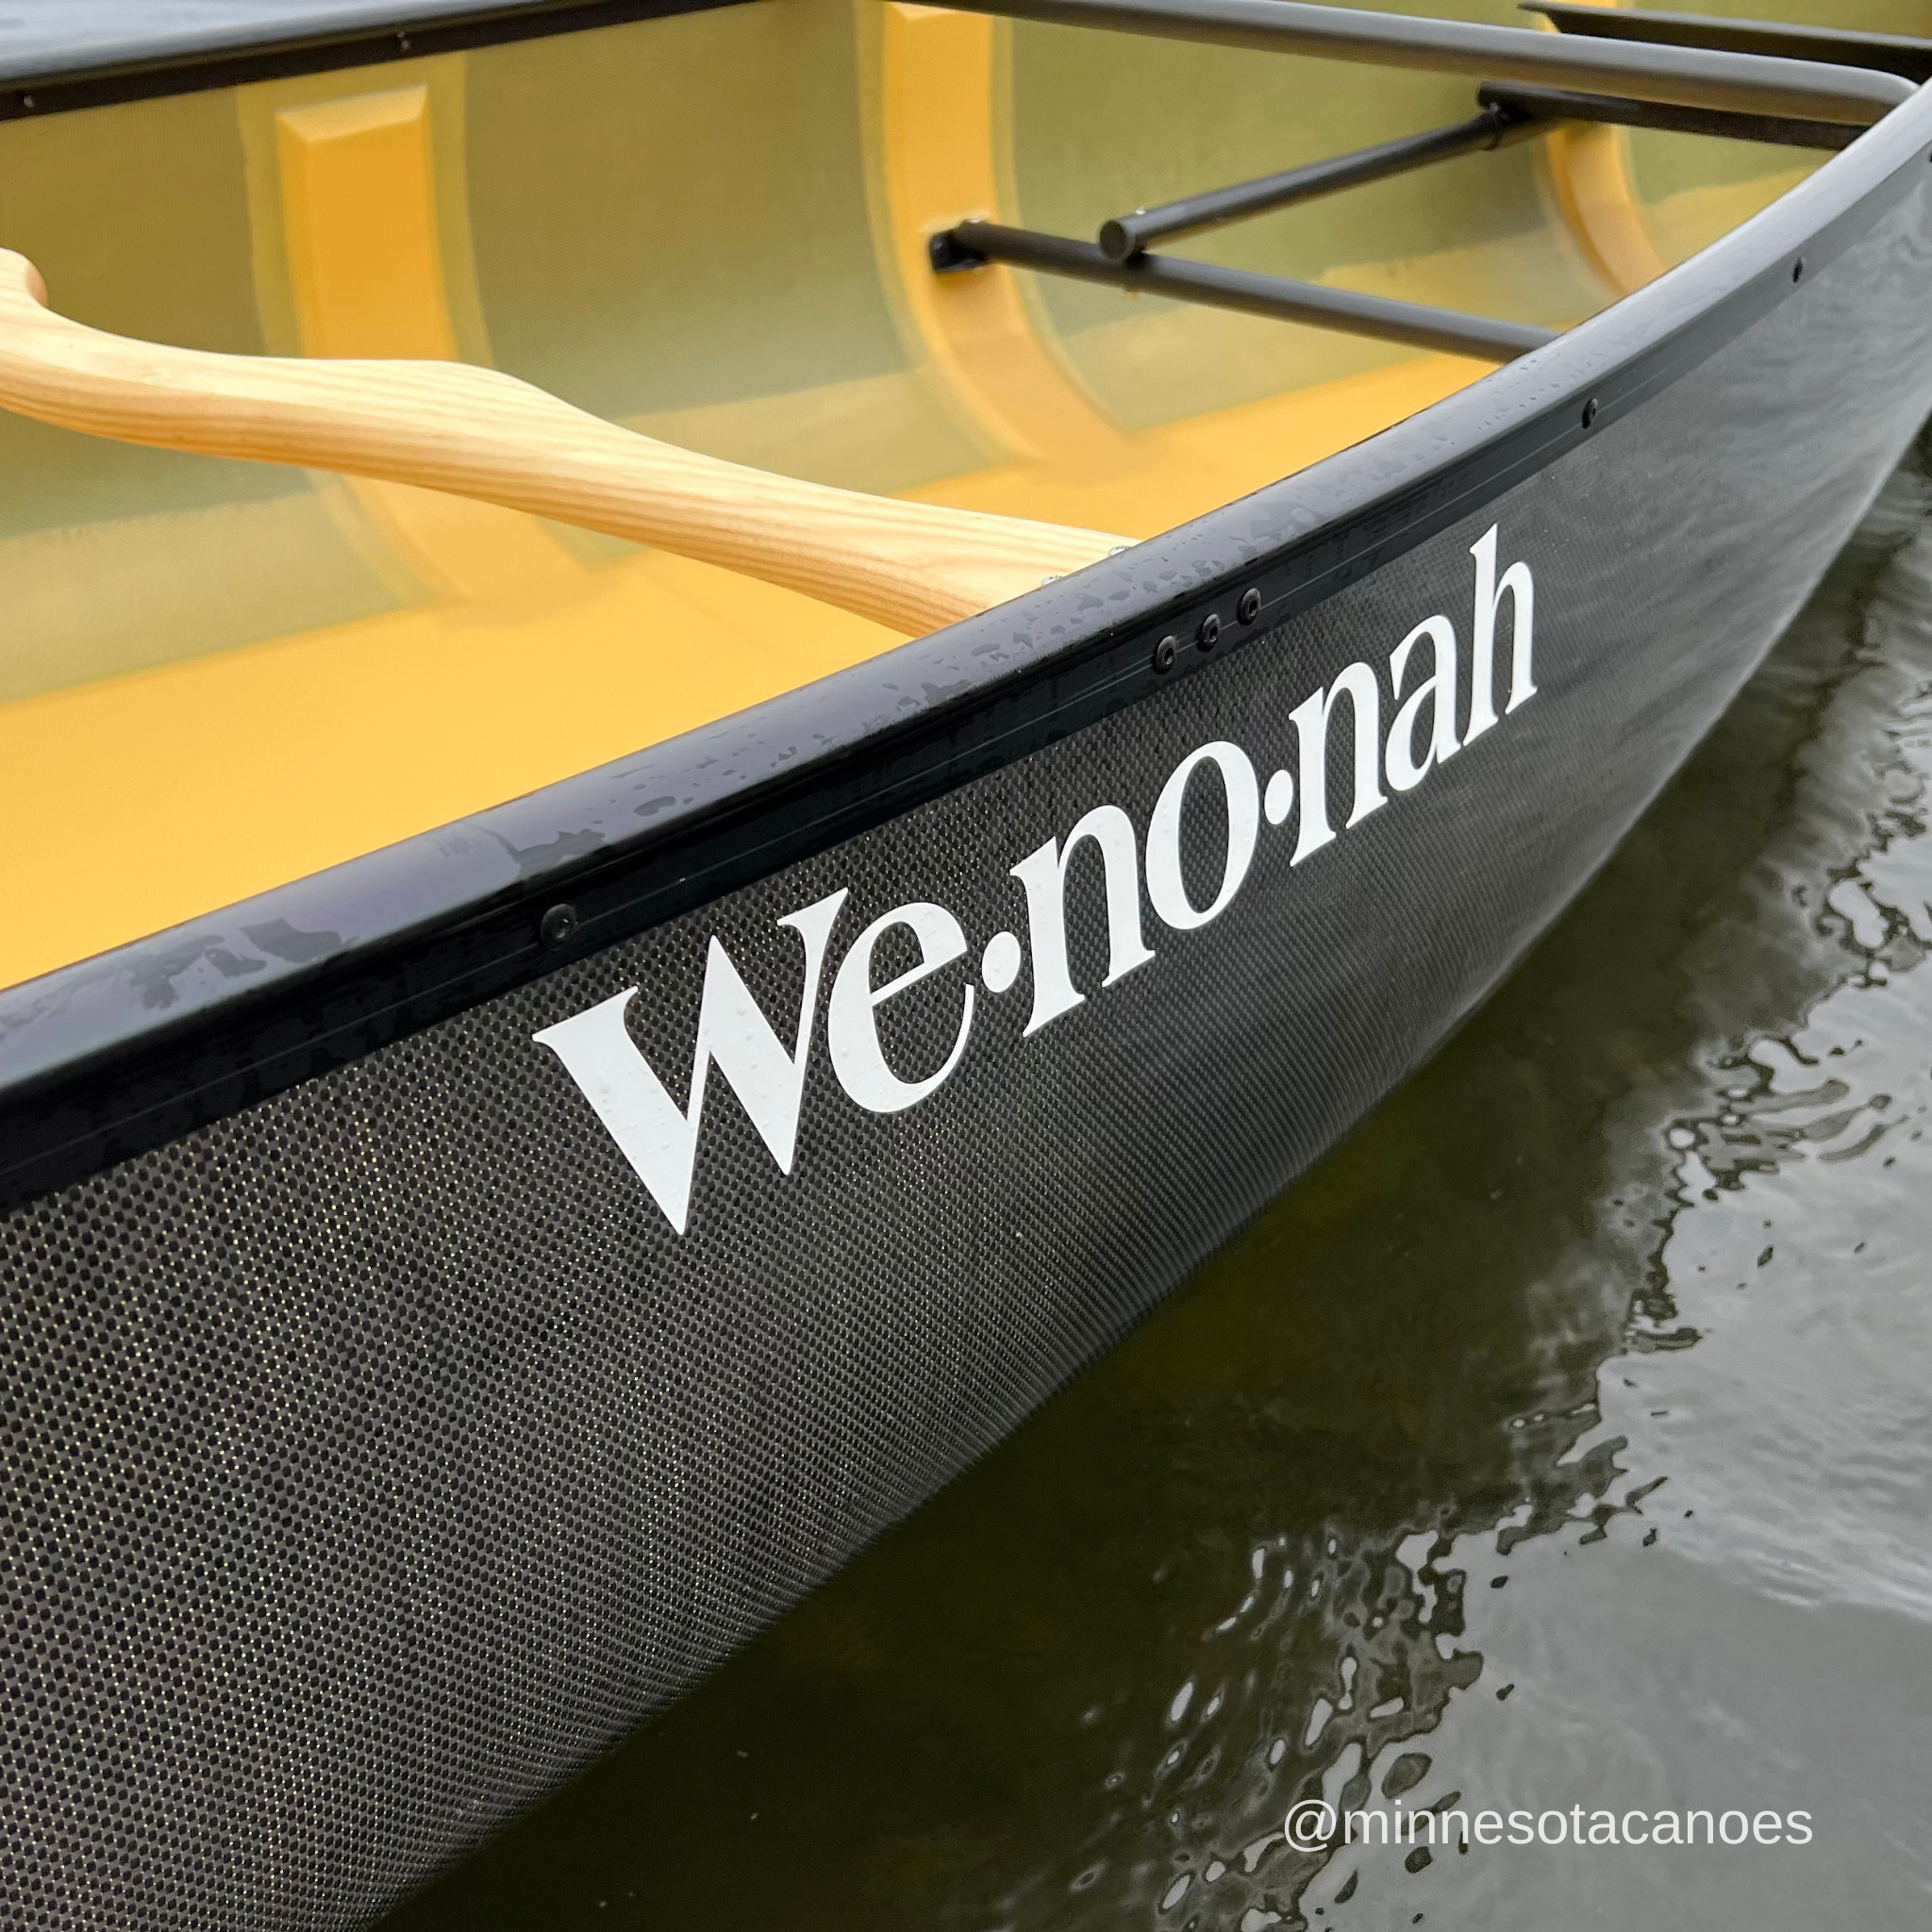 ESCAPE (17' 6") Graphite Ultra-light Tandem Wenonah Canoe